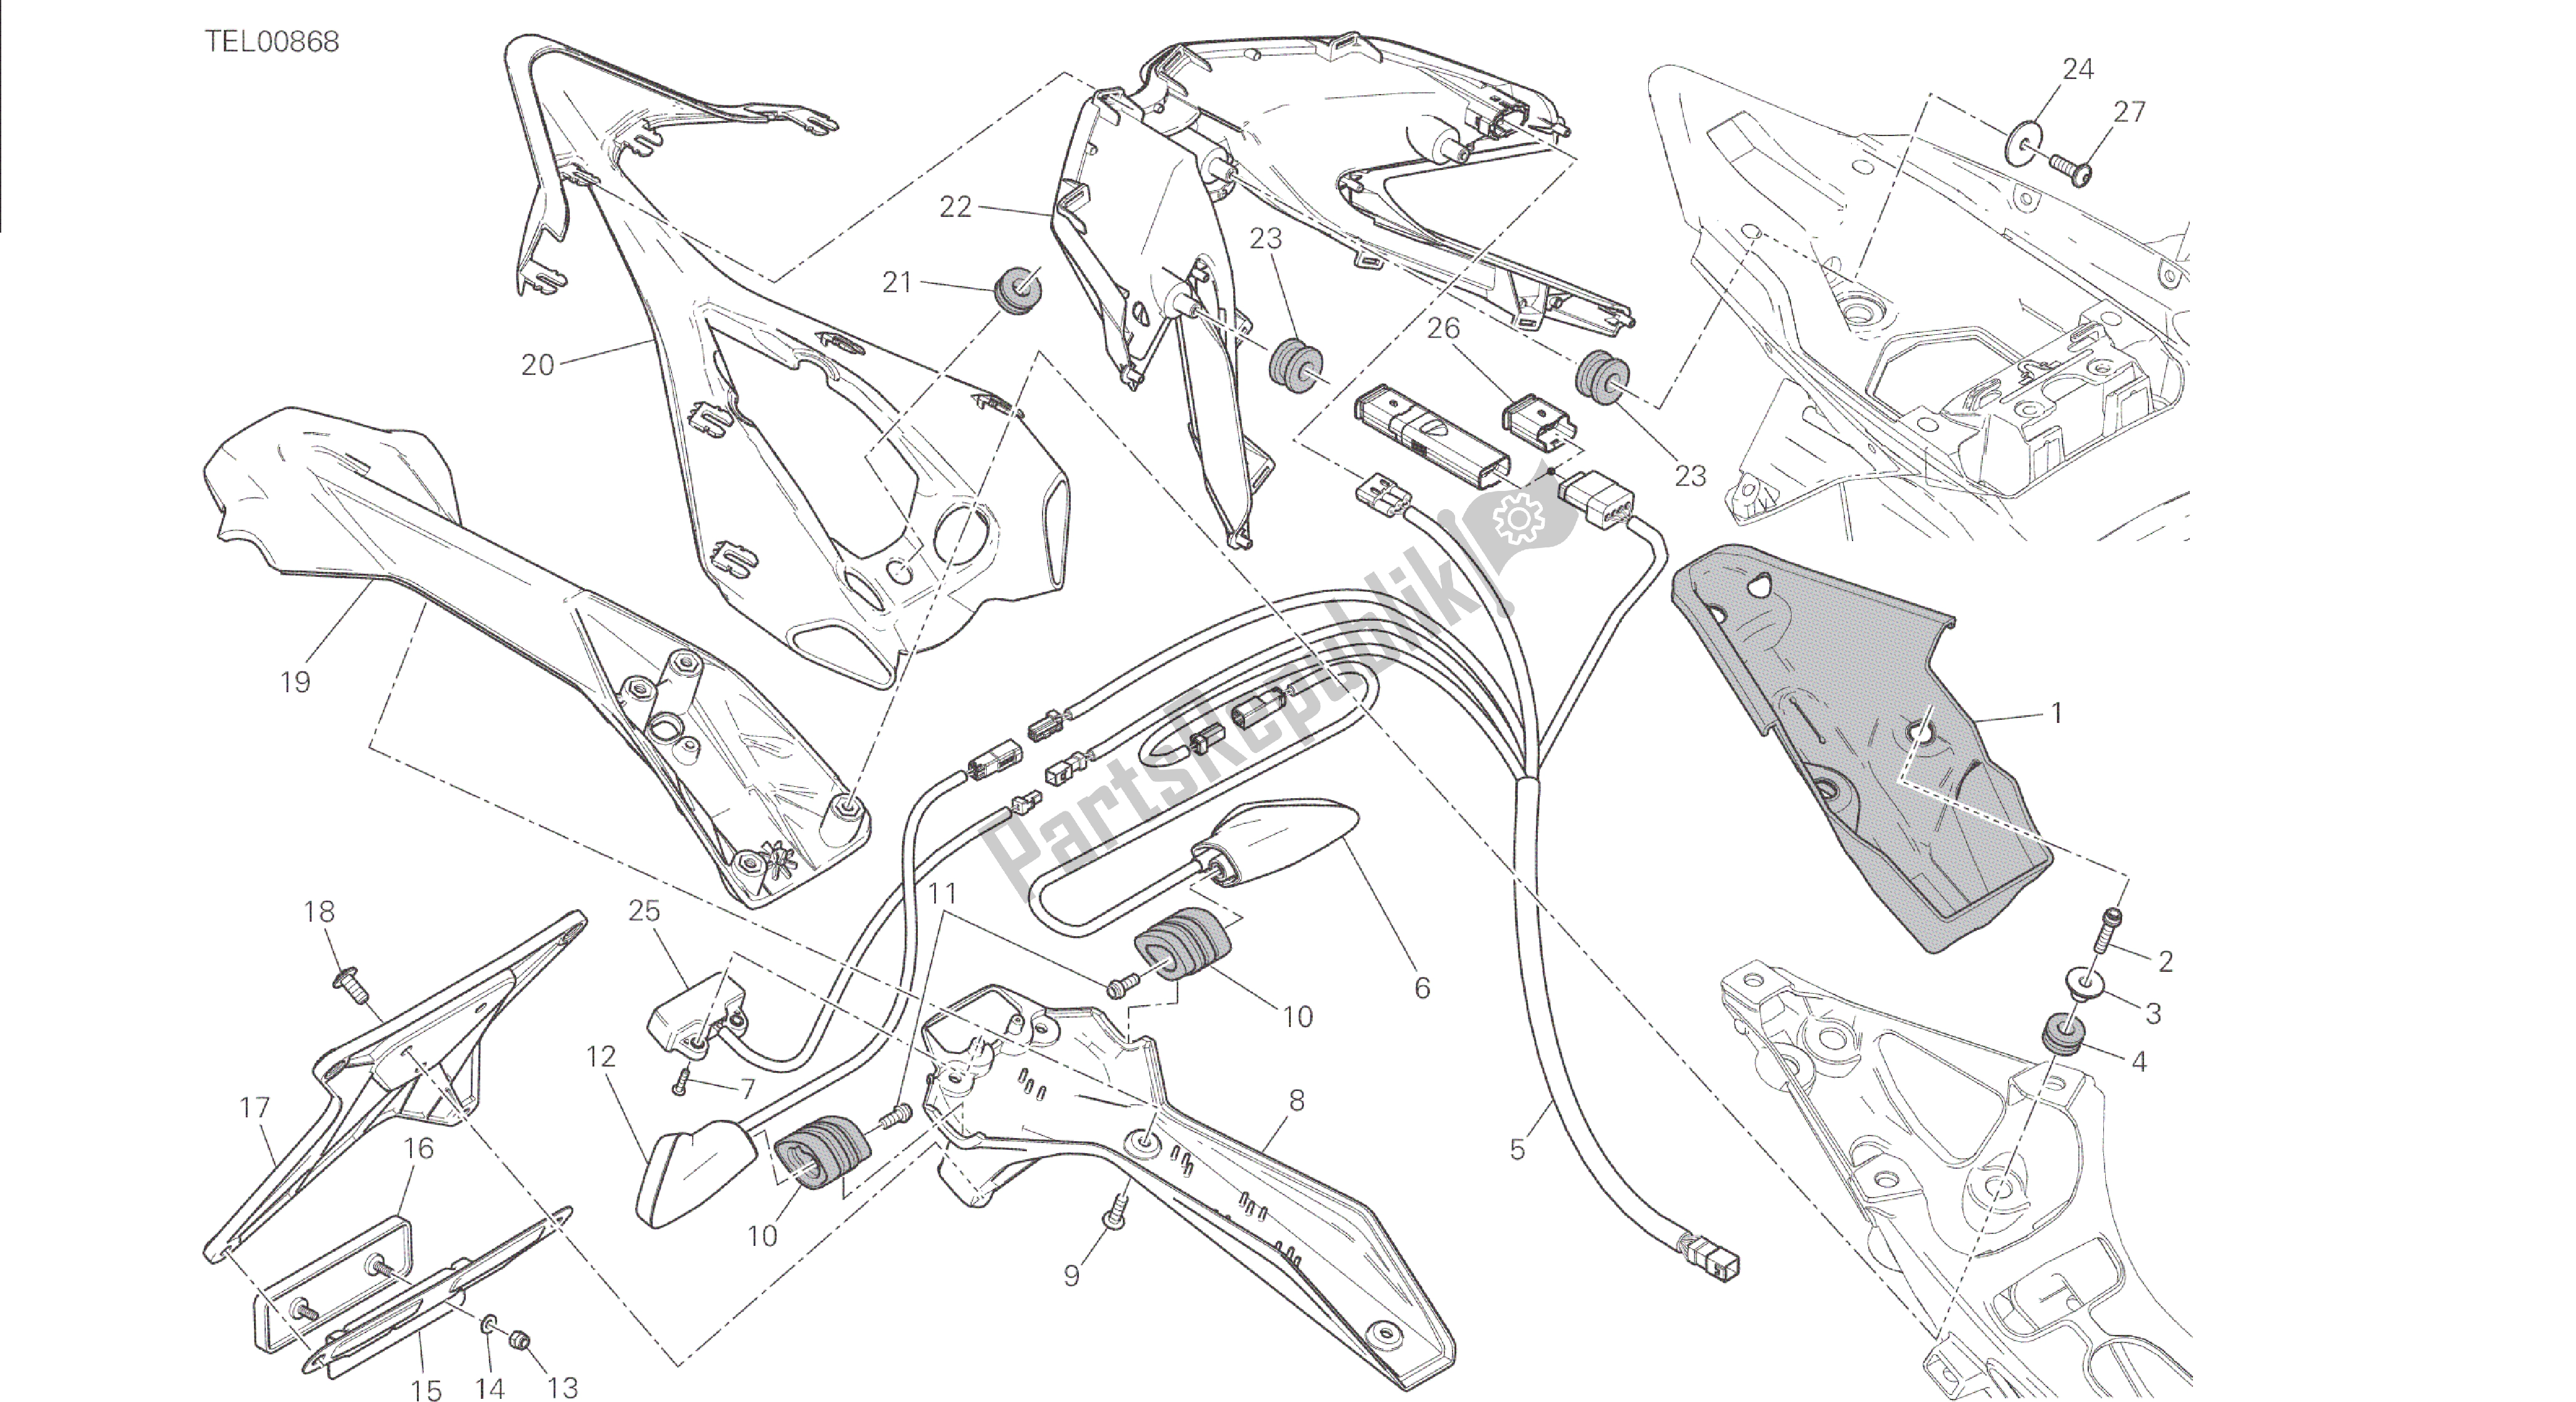 Todas las partes para Dibujo 27a - Soporte De Matrícula - Luz Trasera [mod: 1299; Xst: Marco De Grupo Eur, Fra, Jap, Twn] de Ducati Panigale 1299 2015